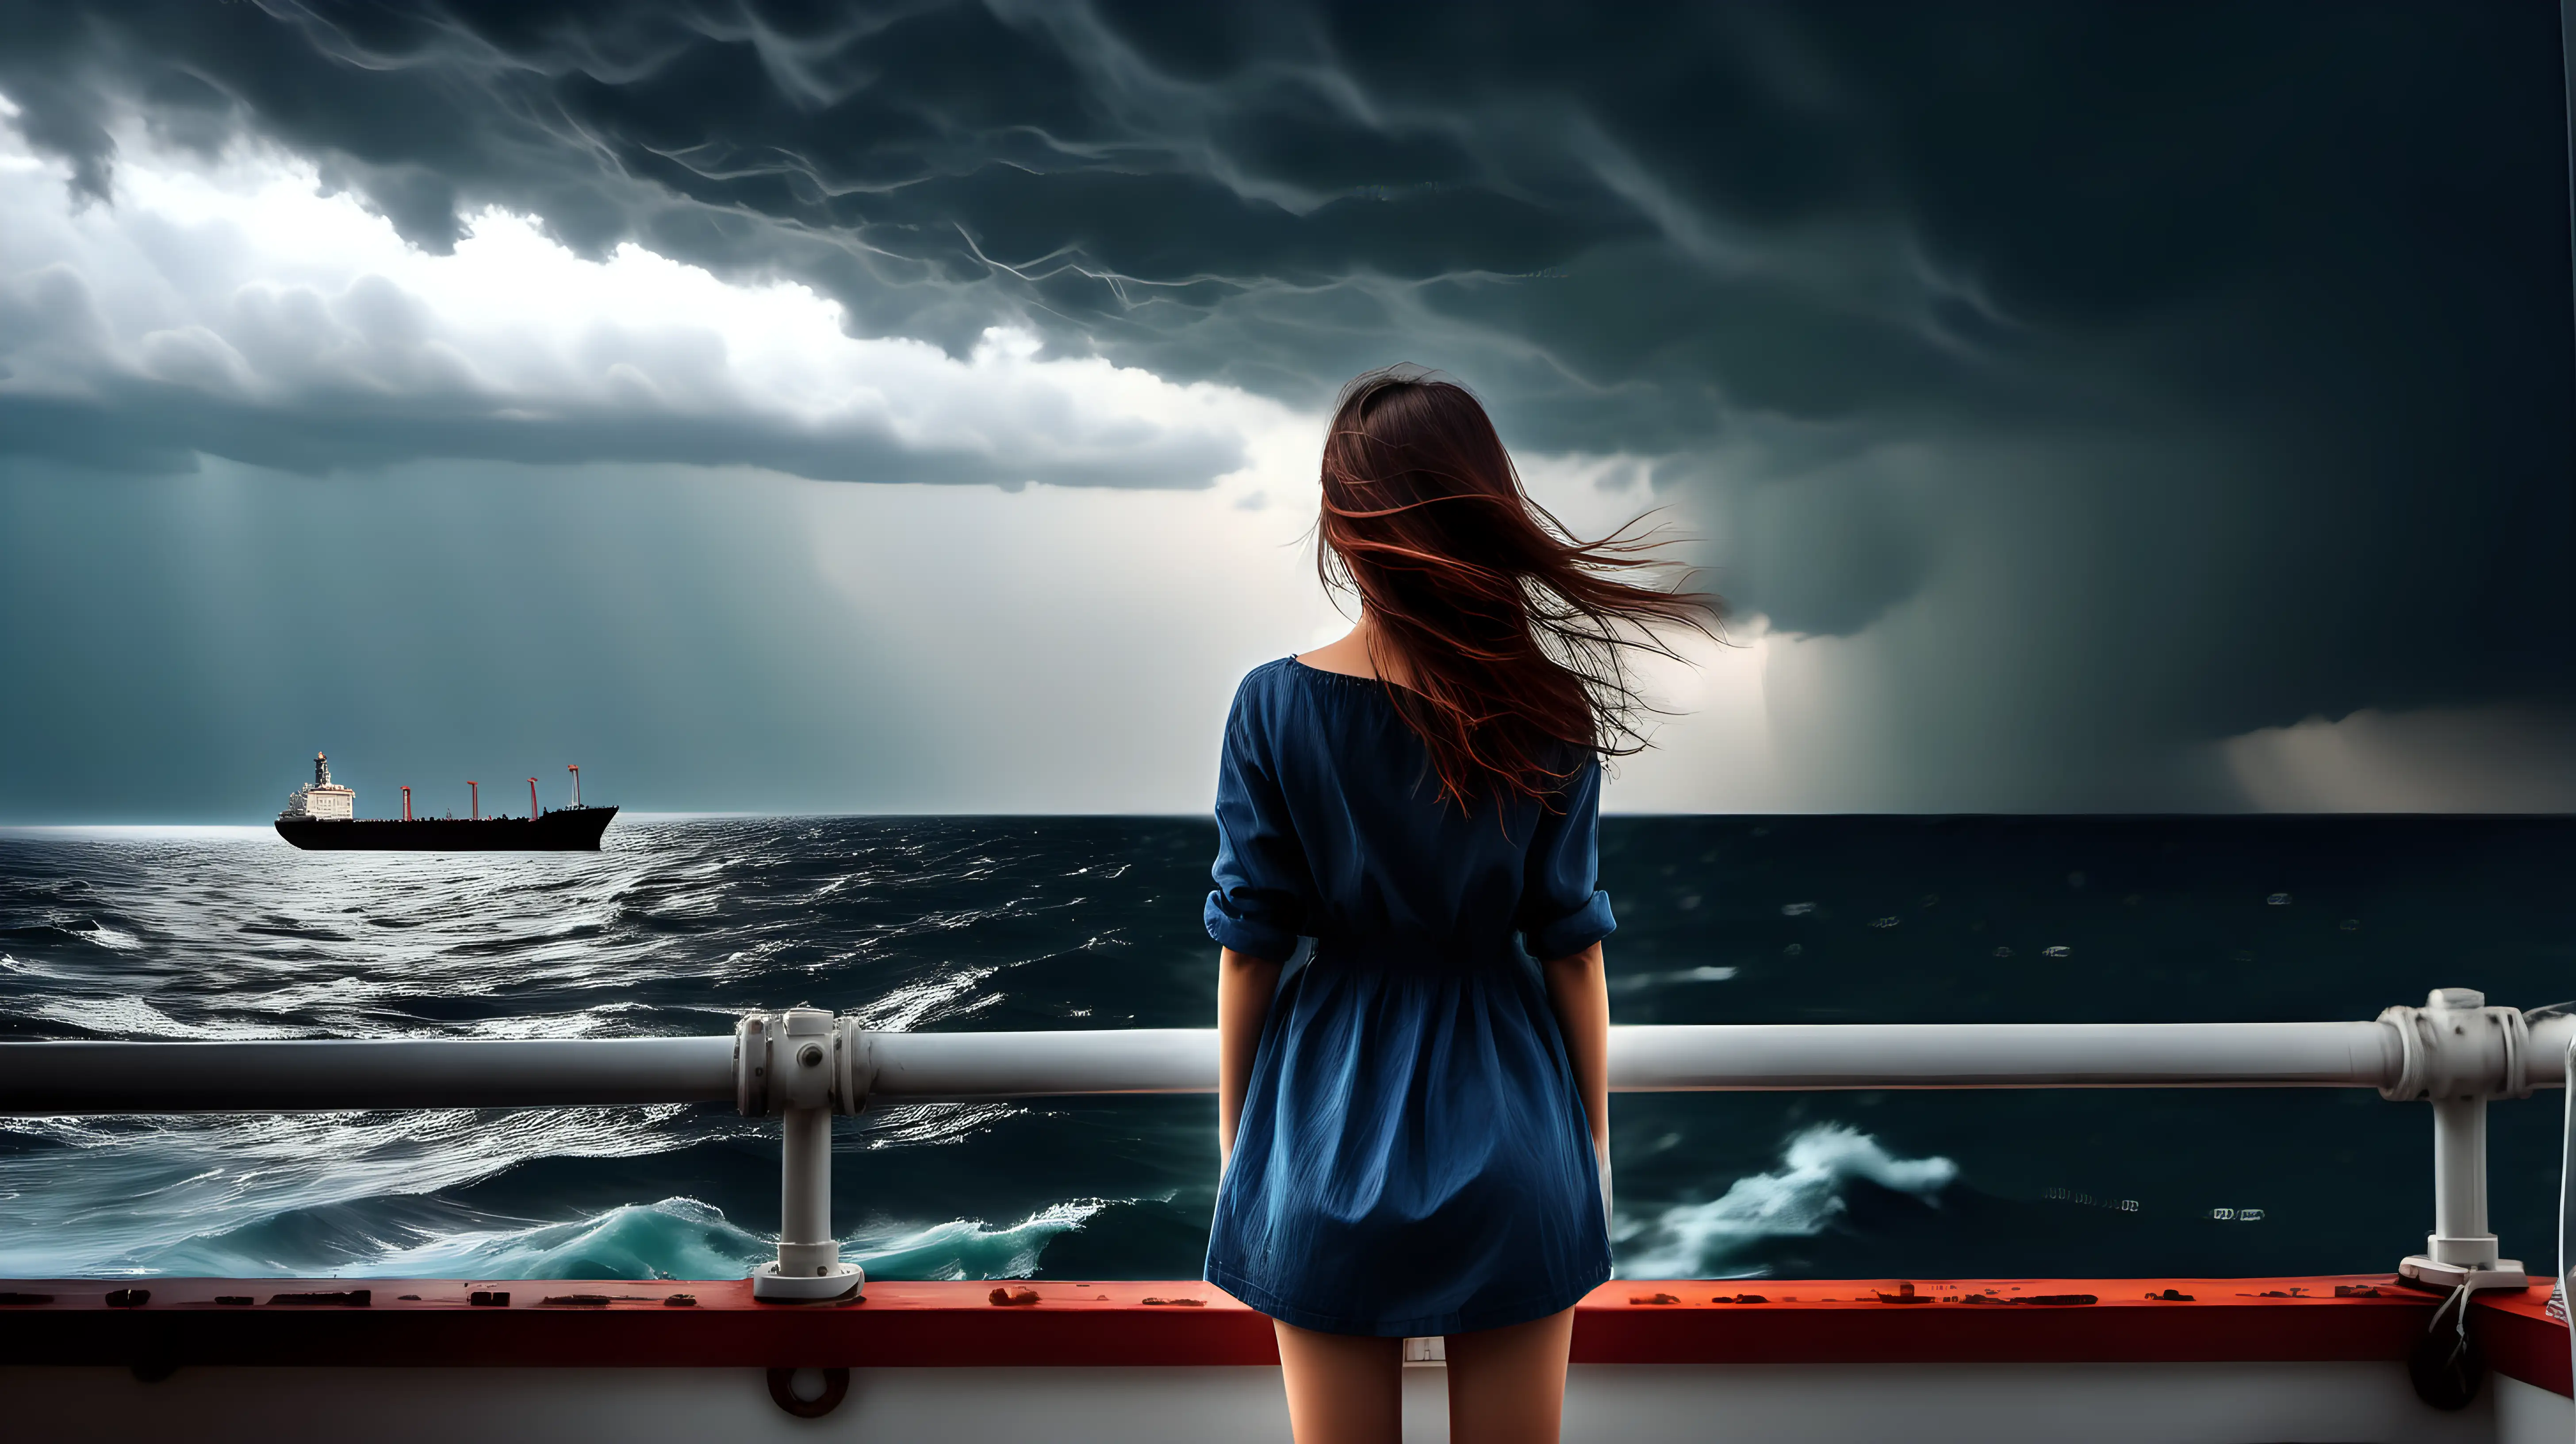 Solitary Beauty Contemplates Stormy Seas on Horizon Ship